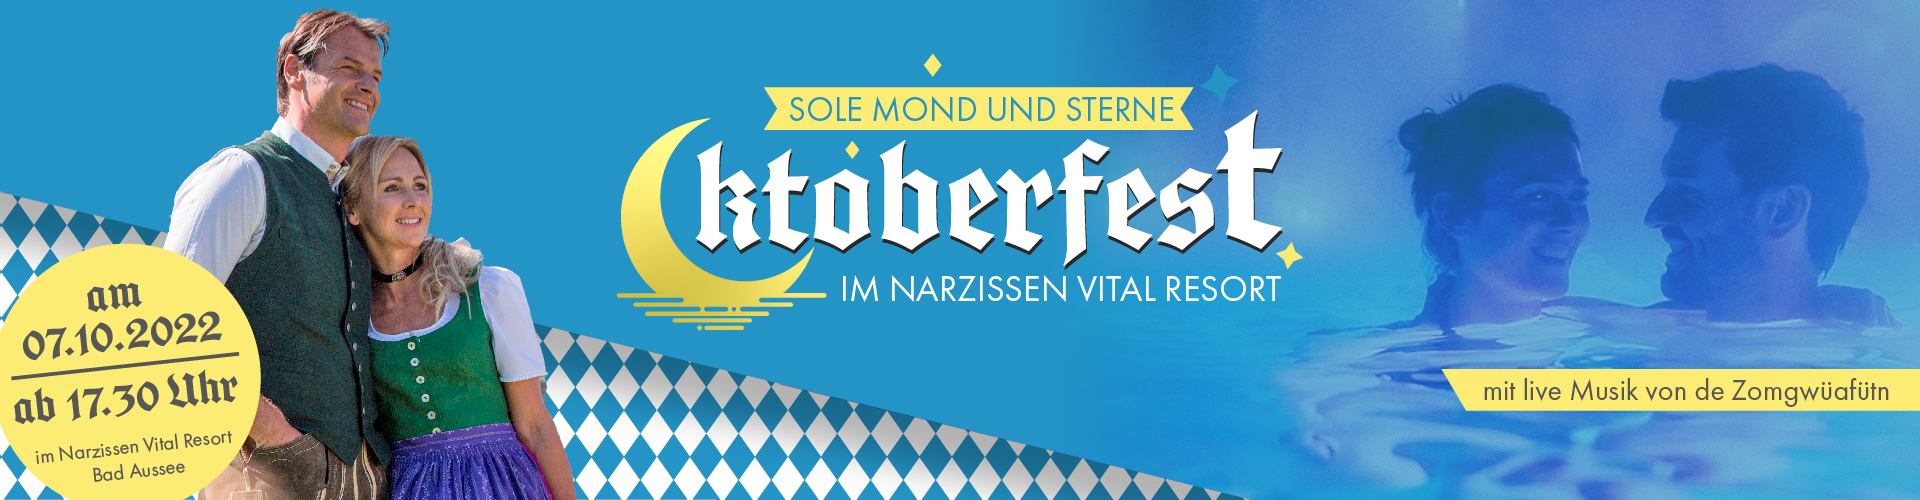 Solemondundstern Sujets Oktoberfest Header Hp 1920x500 1